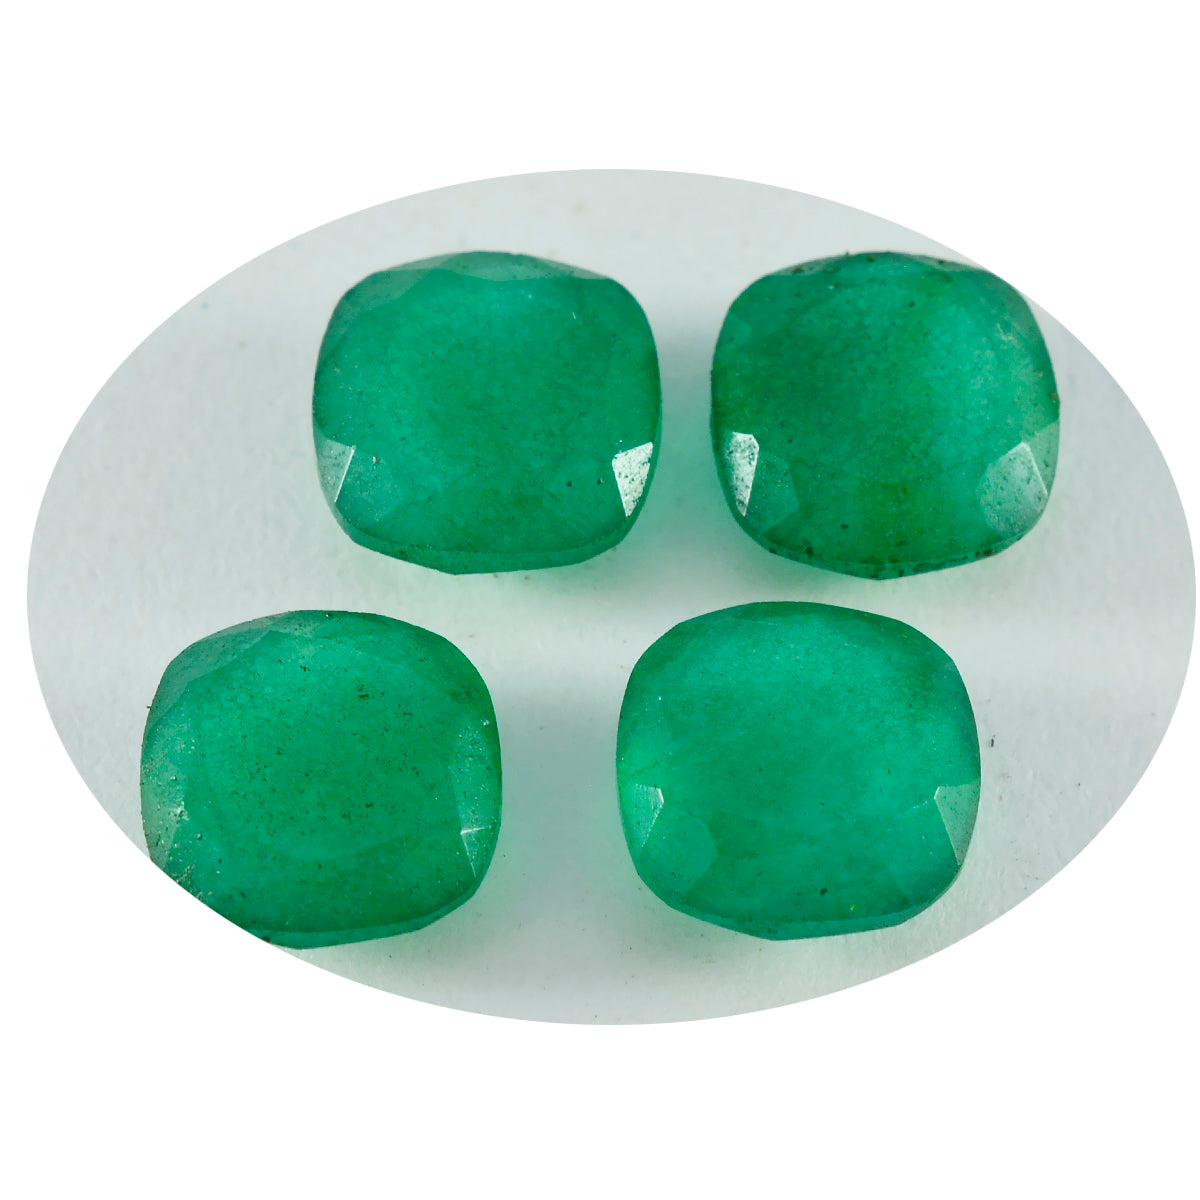 Riyogems 1PC Real Green Jasper Faceted 6x6 mm Cushion Shape Nice Quality Loose Gemstone